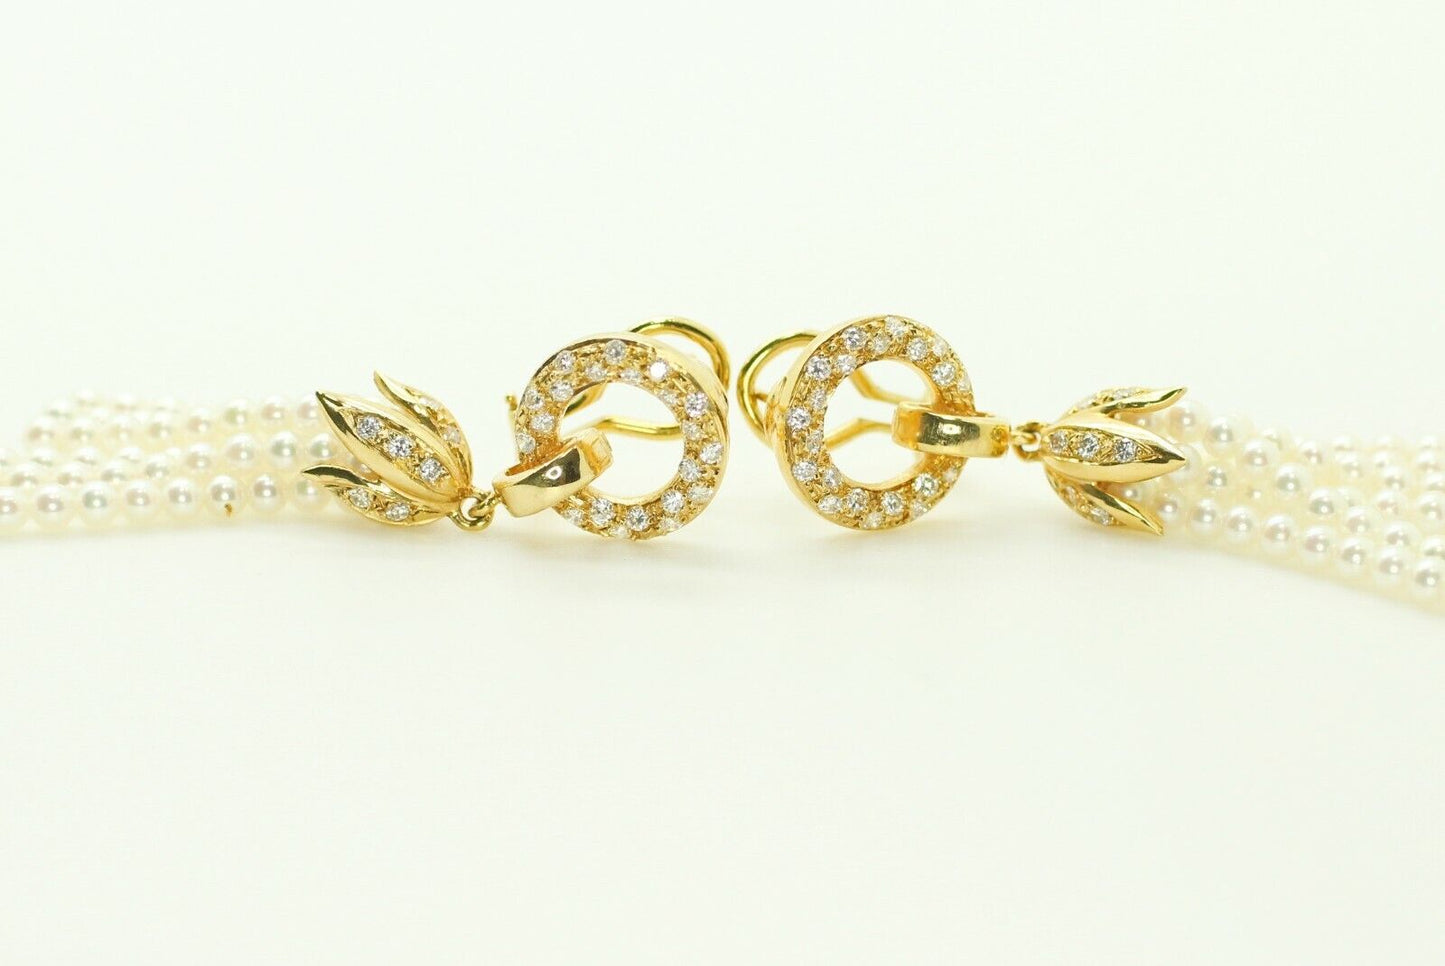 Pearl Tassel Earrings With Diamonds in 18k Yellow Gold